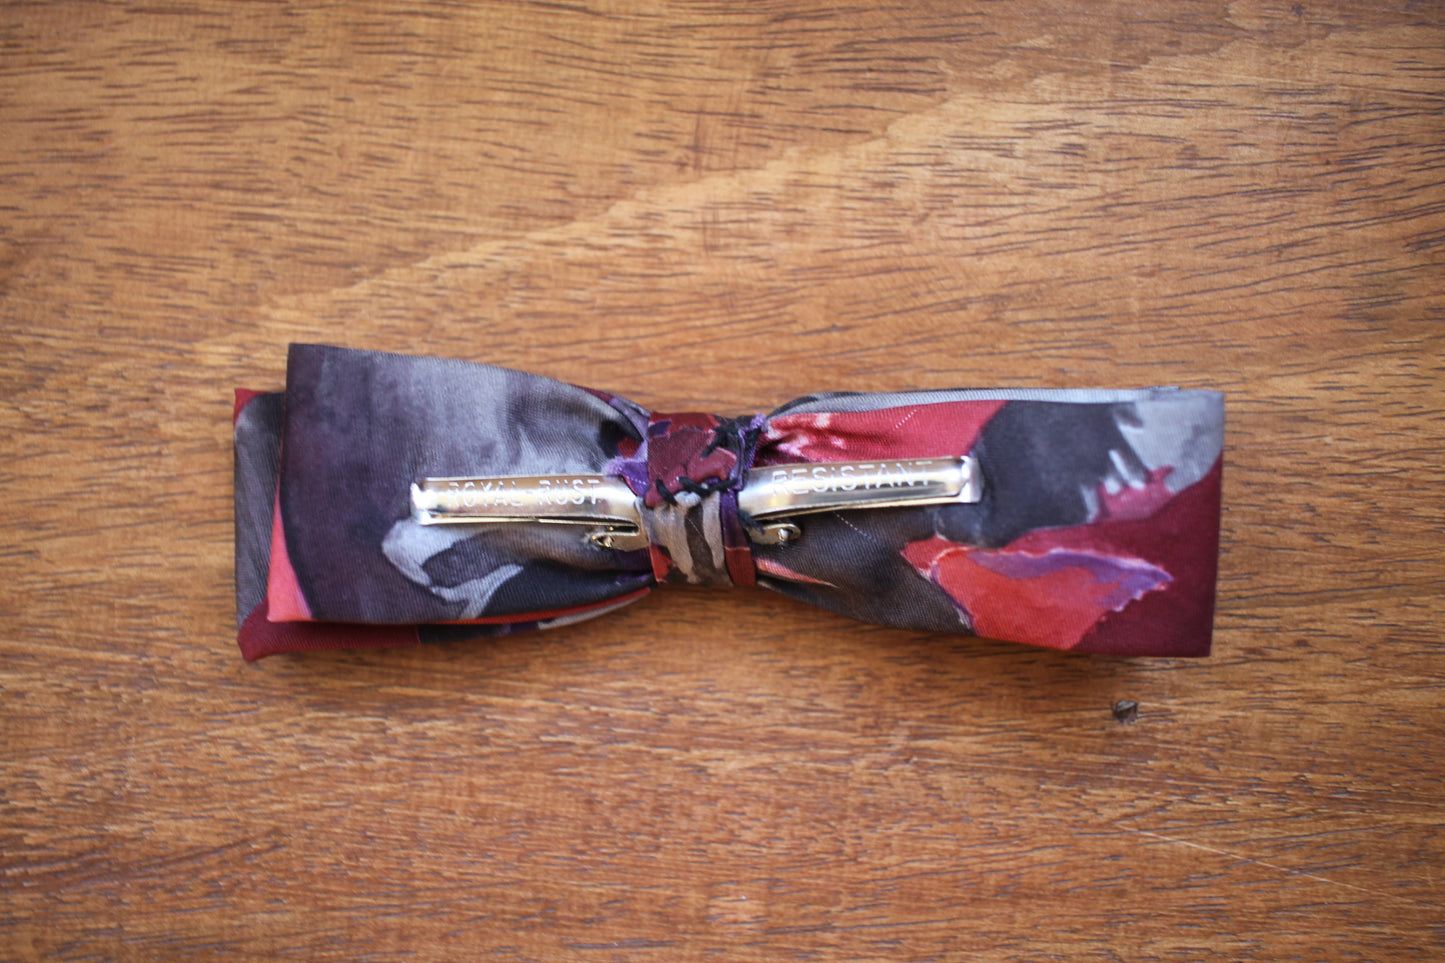 Vintage pre-tied clip on dark red grey pattern bow tie